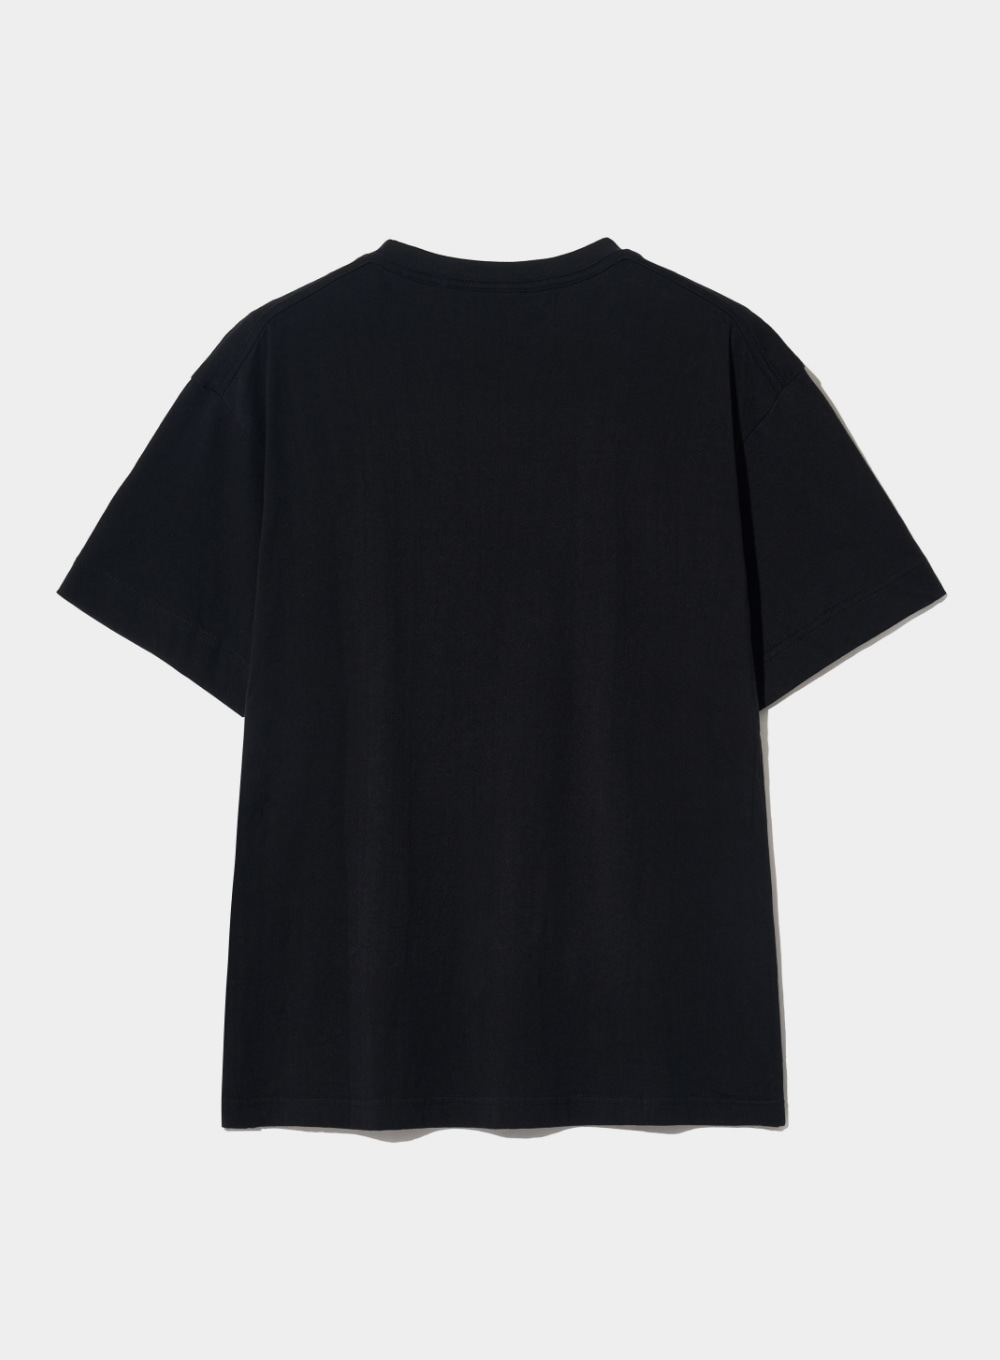 Capri Citron Drawing Summer Graphic T-Shirts - Classic Black